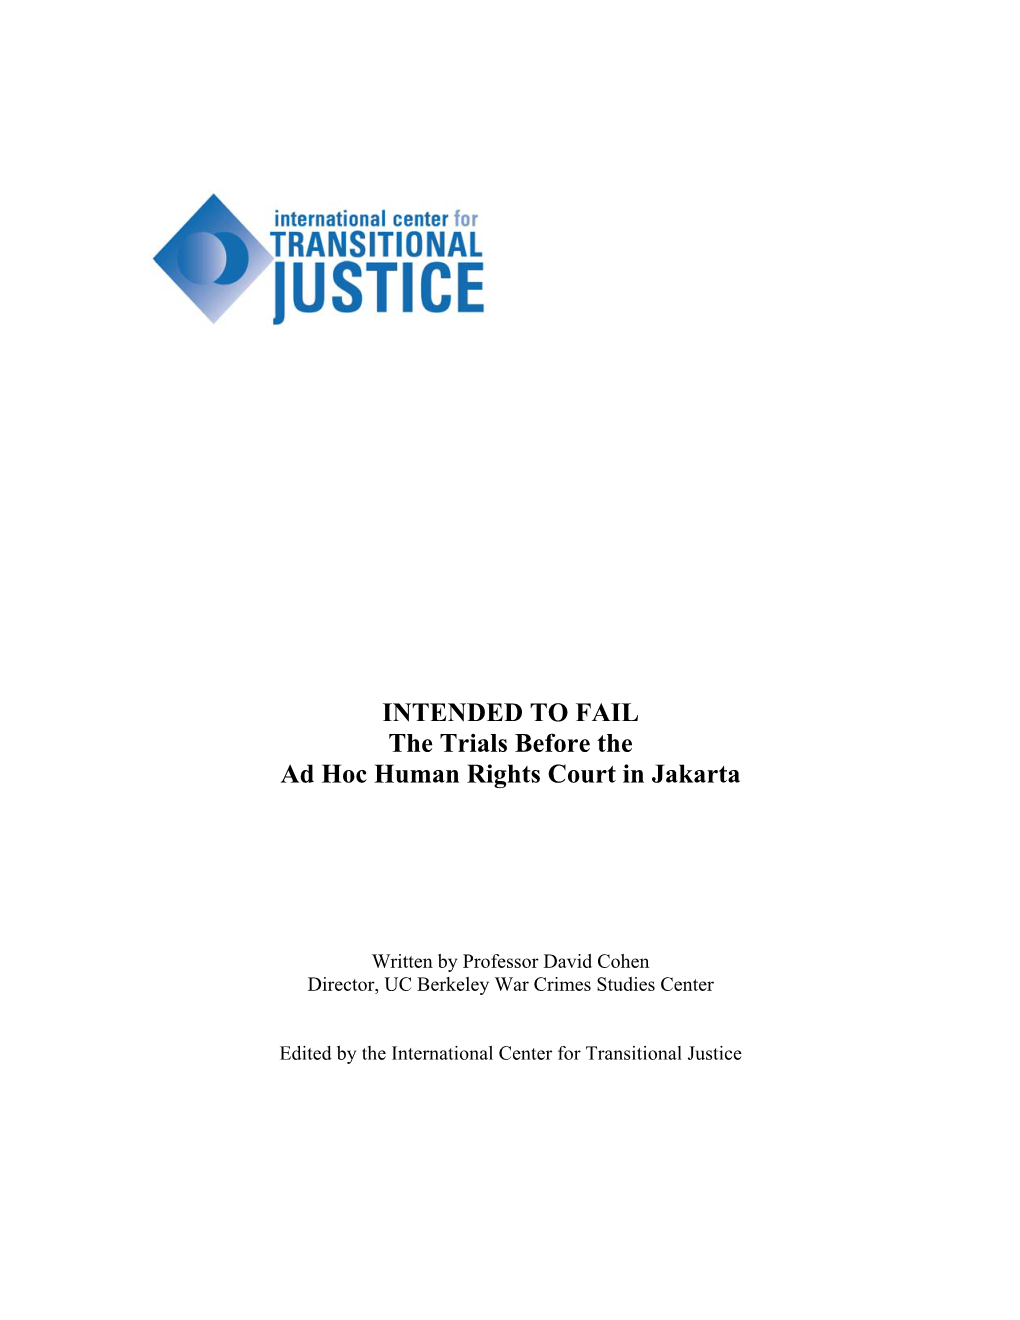 Interim Report on Indonesian Ad Hoc Human Rights Tribunals